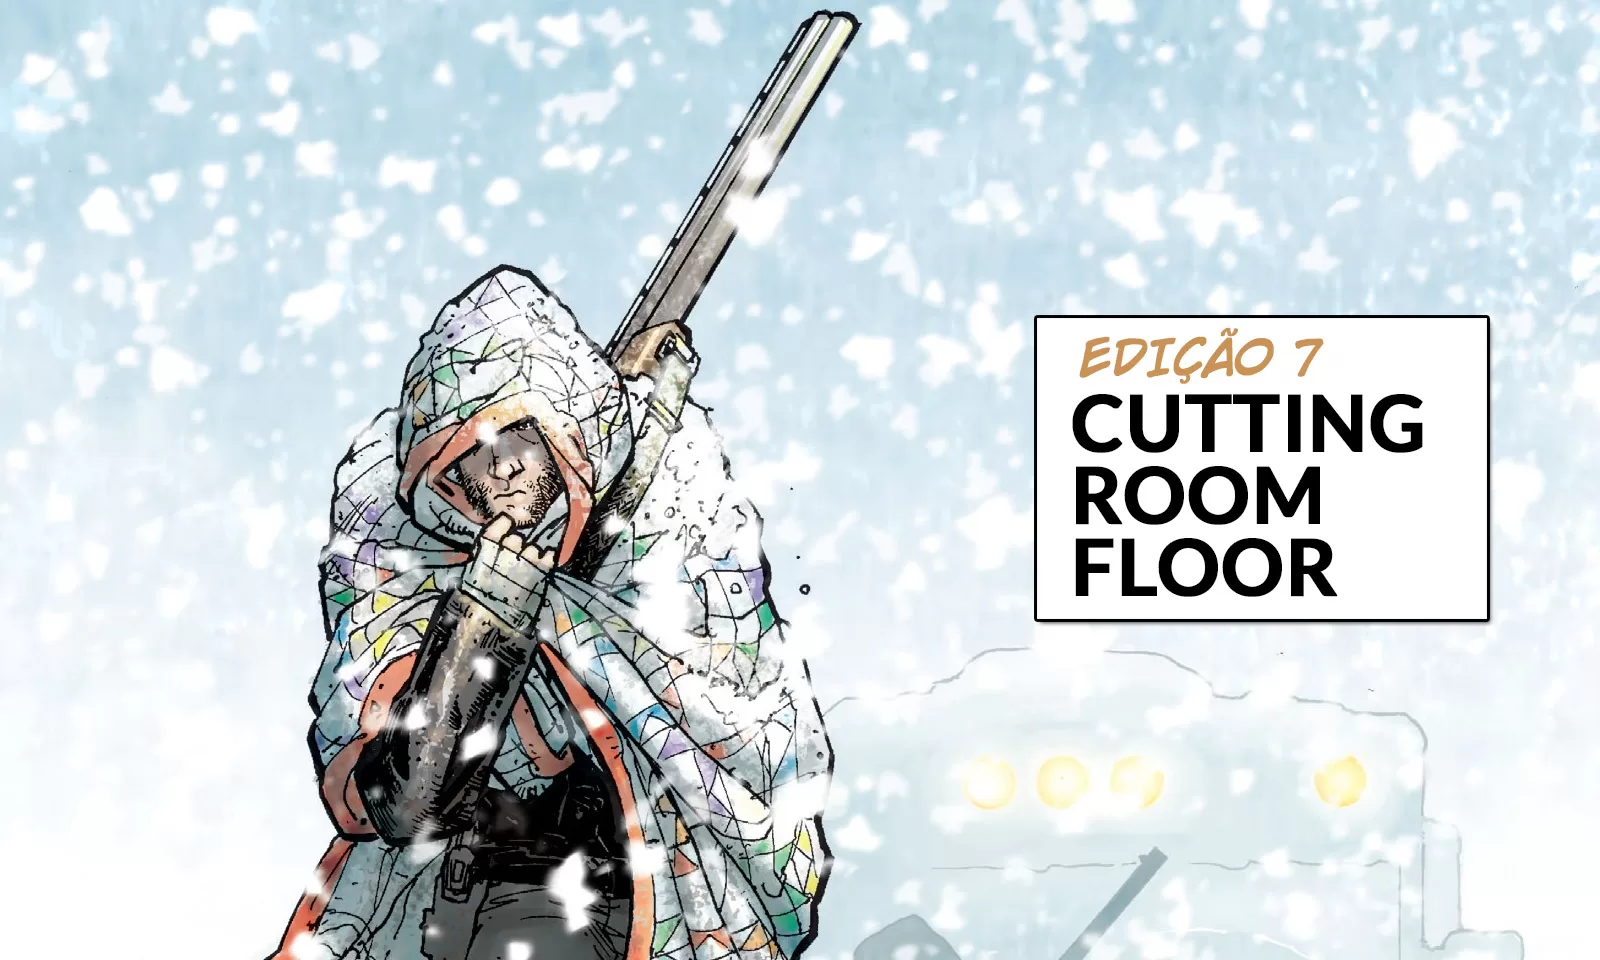 Arte com imagem da capa da The Walking Dead Deluxe 7 para o Cutting Room Floor.